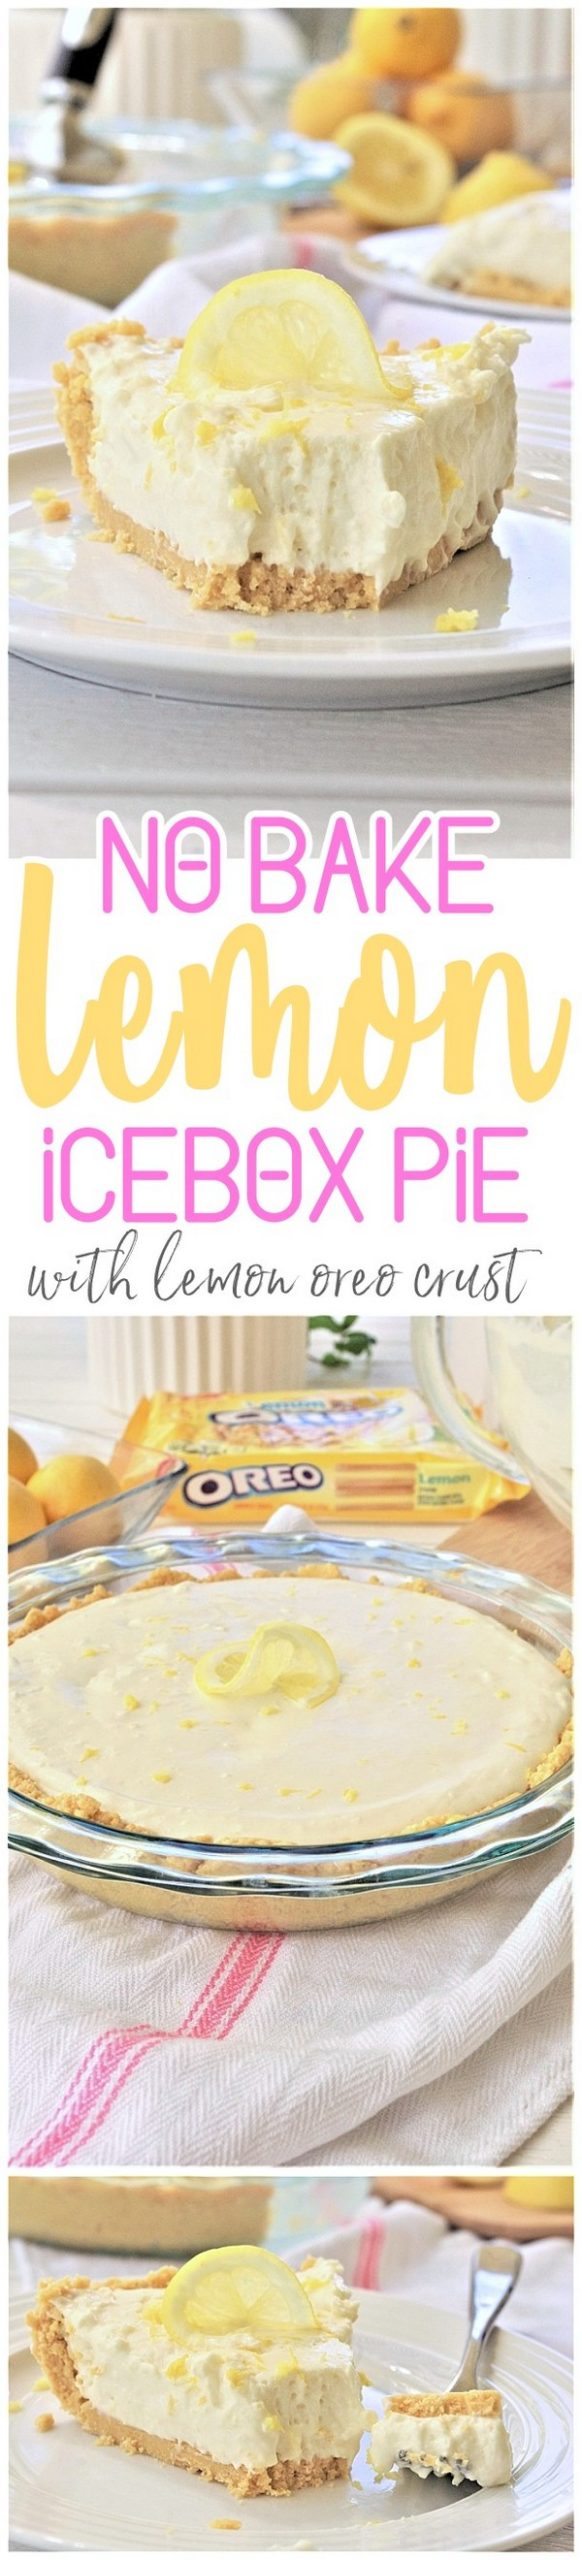 No-Bake Lemon Oreo Crust Lemon Cheesecake Icebox Pie Recipe